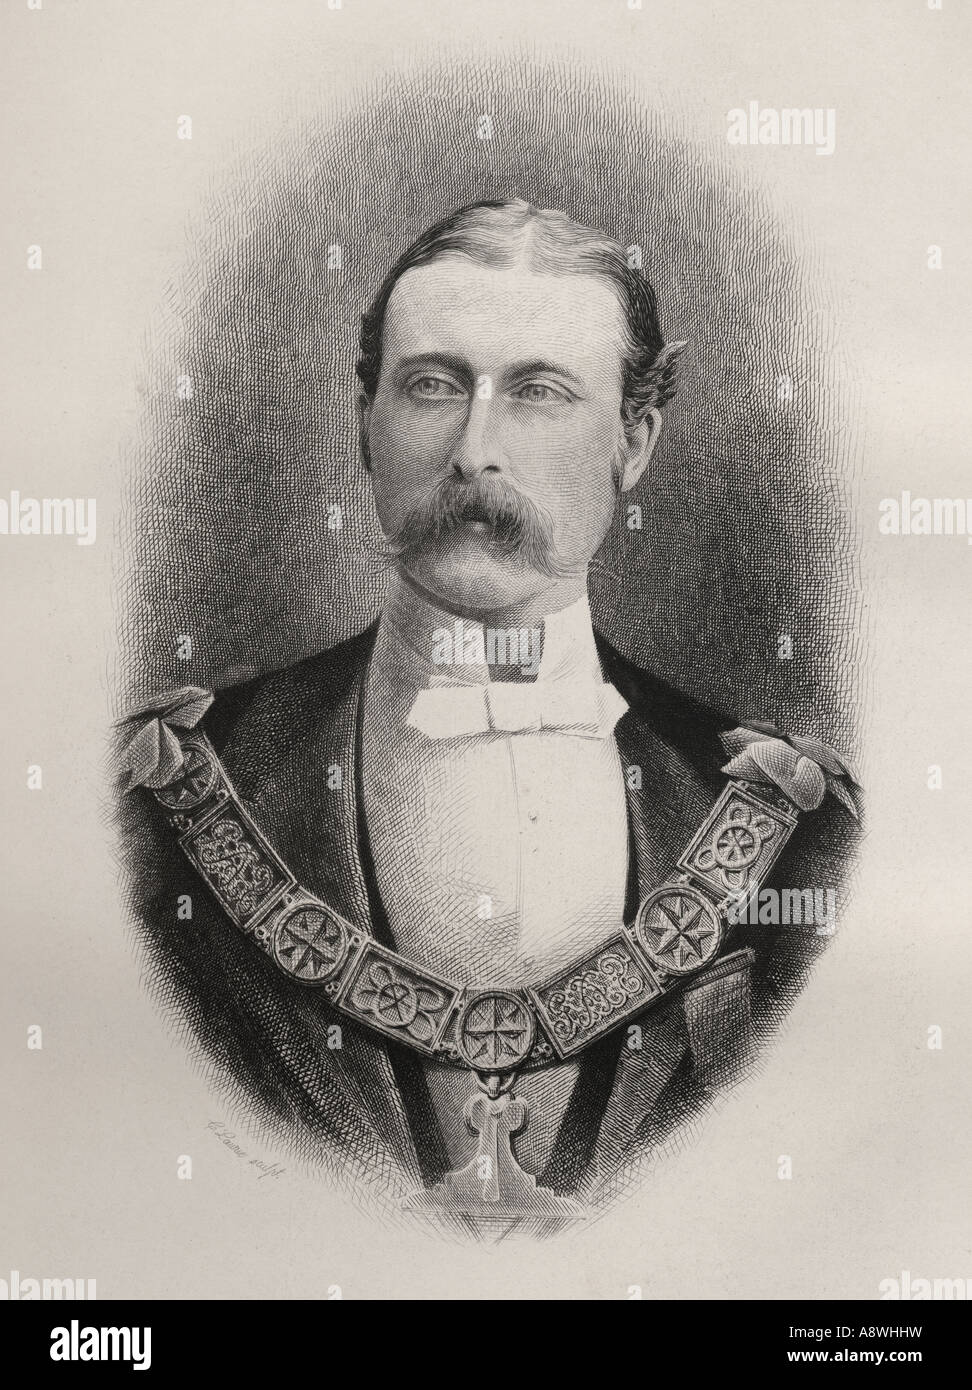 Prince Arthur William Patrick, Duke of Connaught and Strathearn, 1850 - 1942. Stock Photo